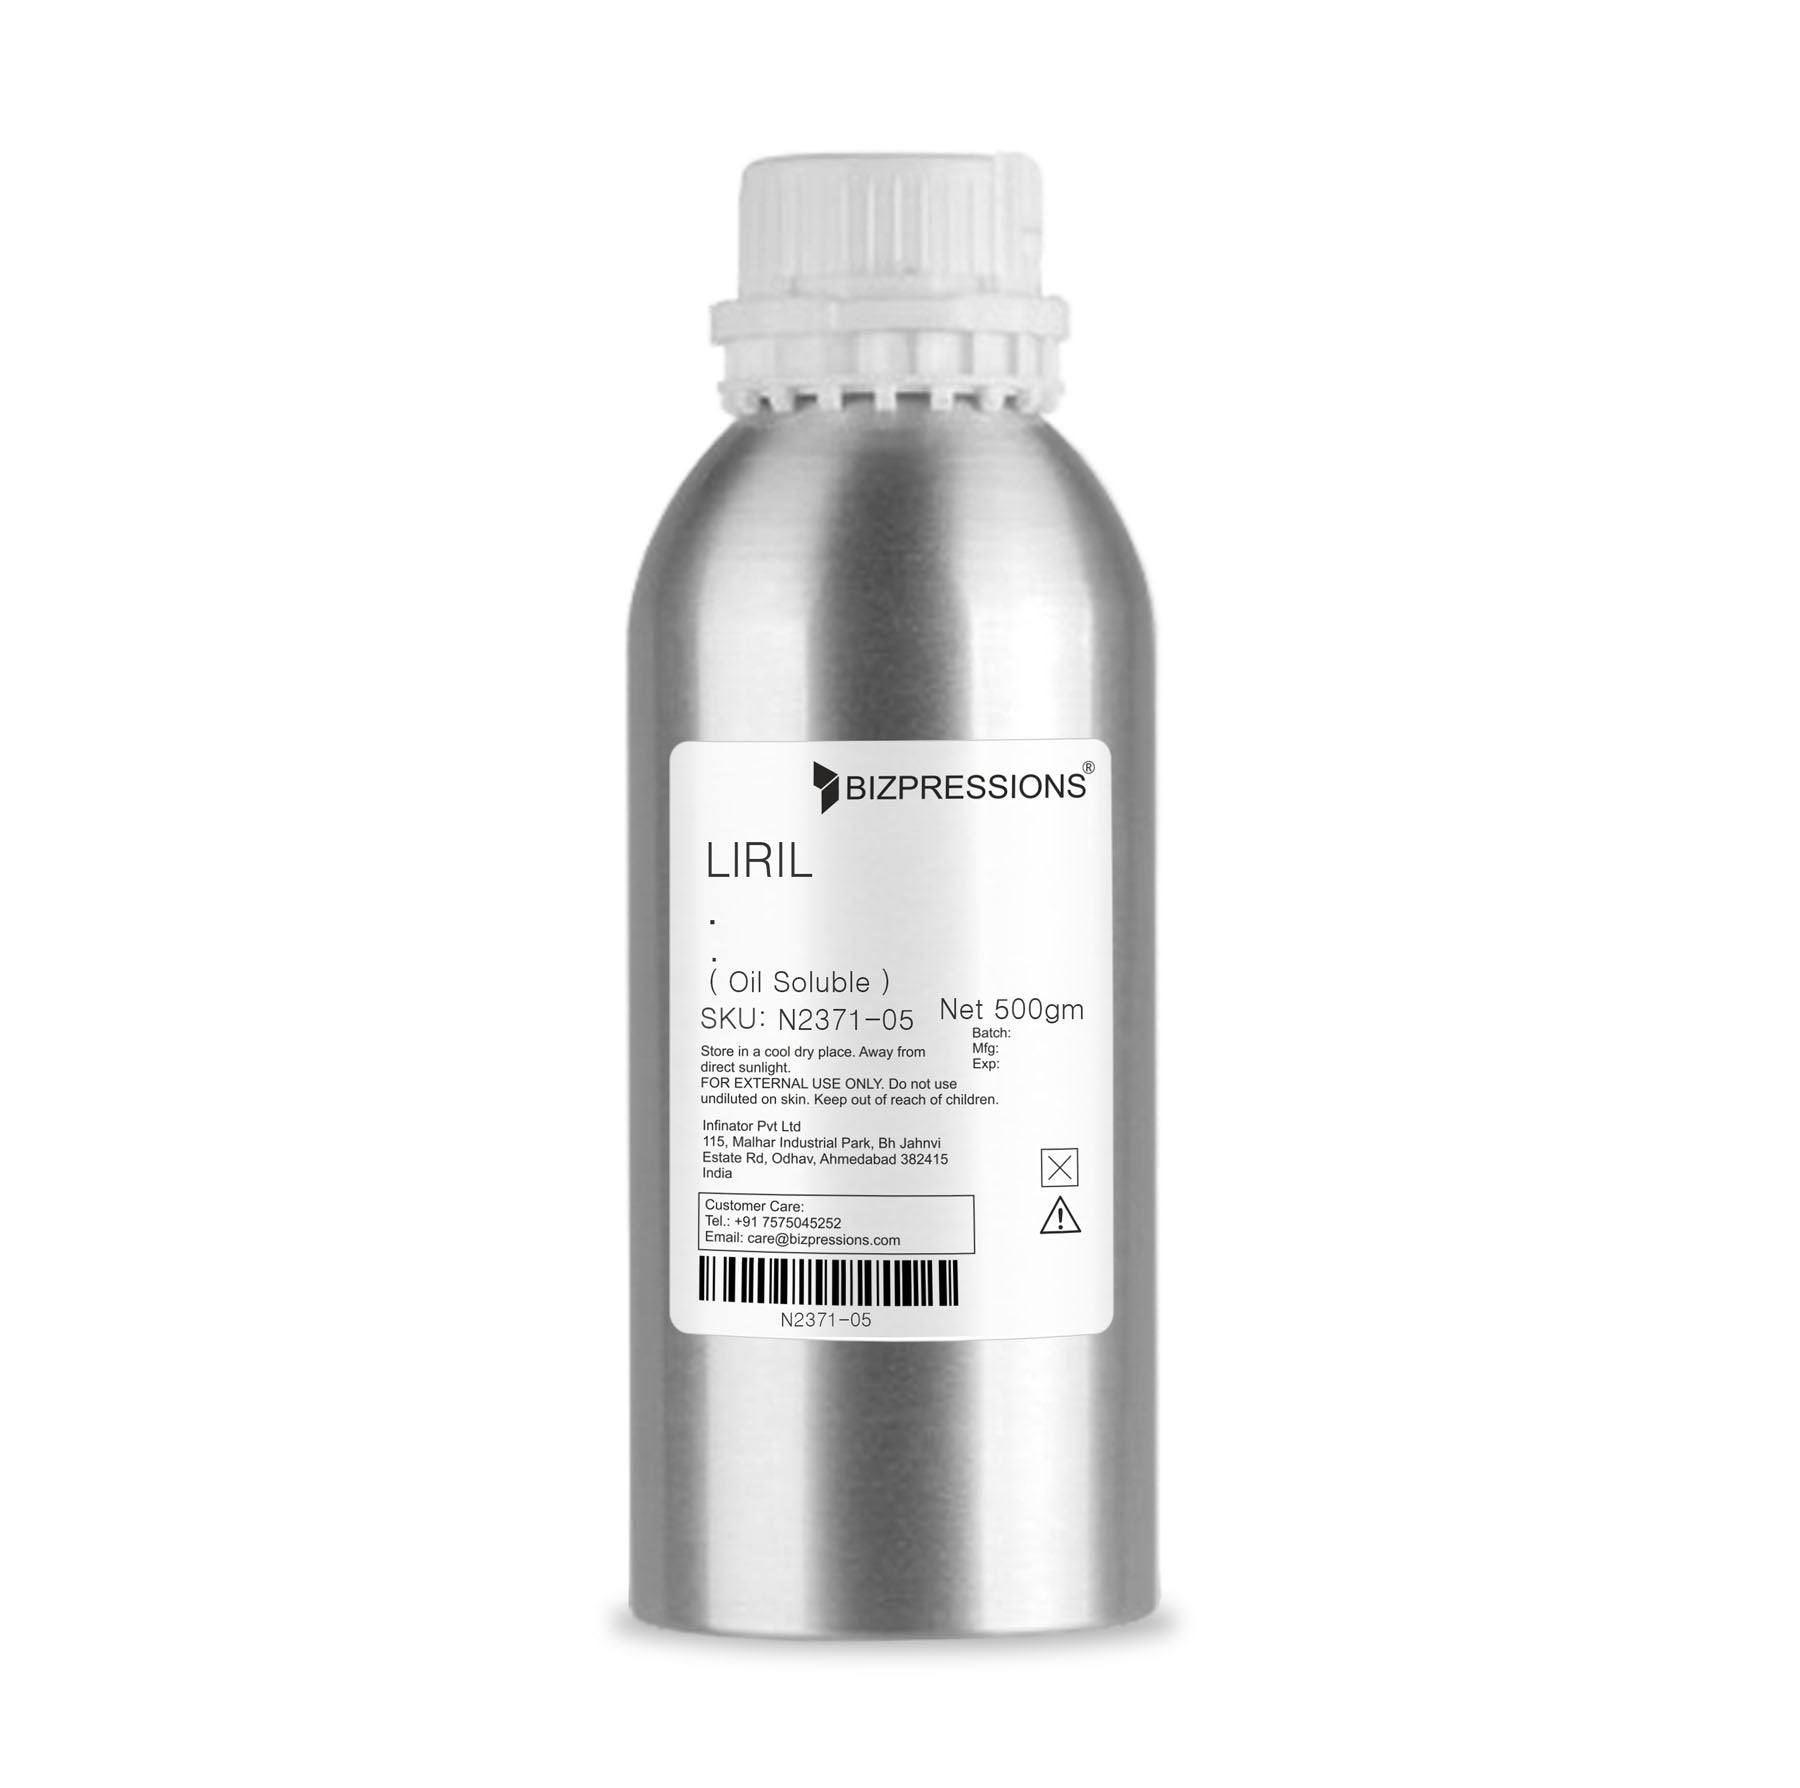 LIRIL - Fragrance ( Oil Soluble ) - 500 gm